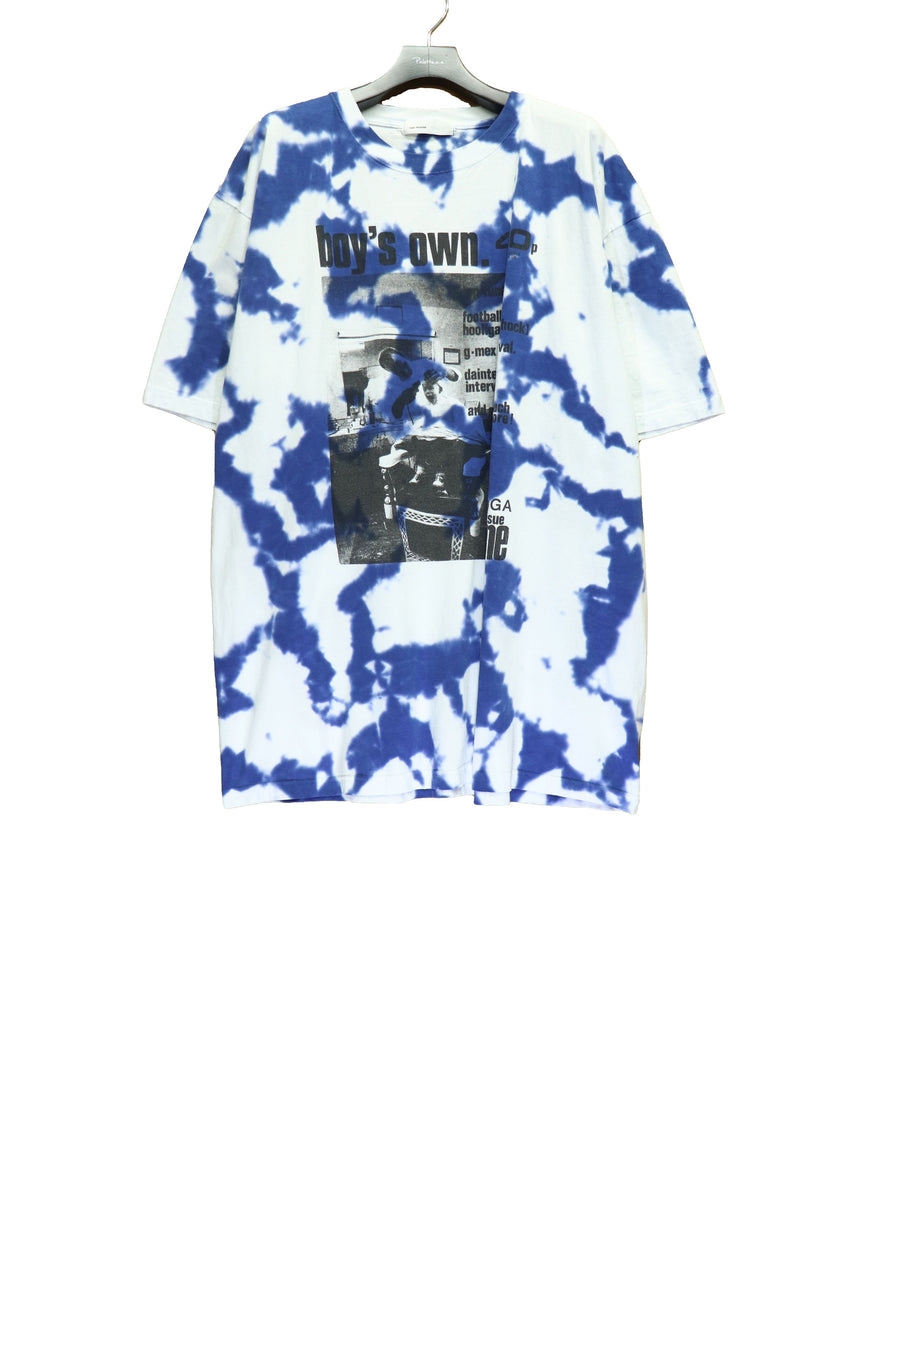 TOGA VIRILIS(トーガ ビリリース)のTie dye print T-shirt ISSUE ONE